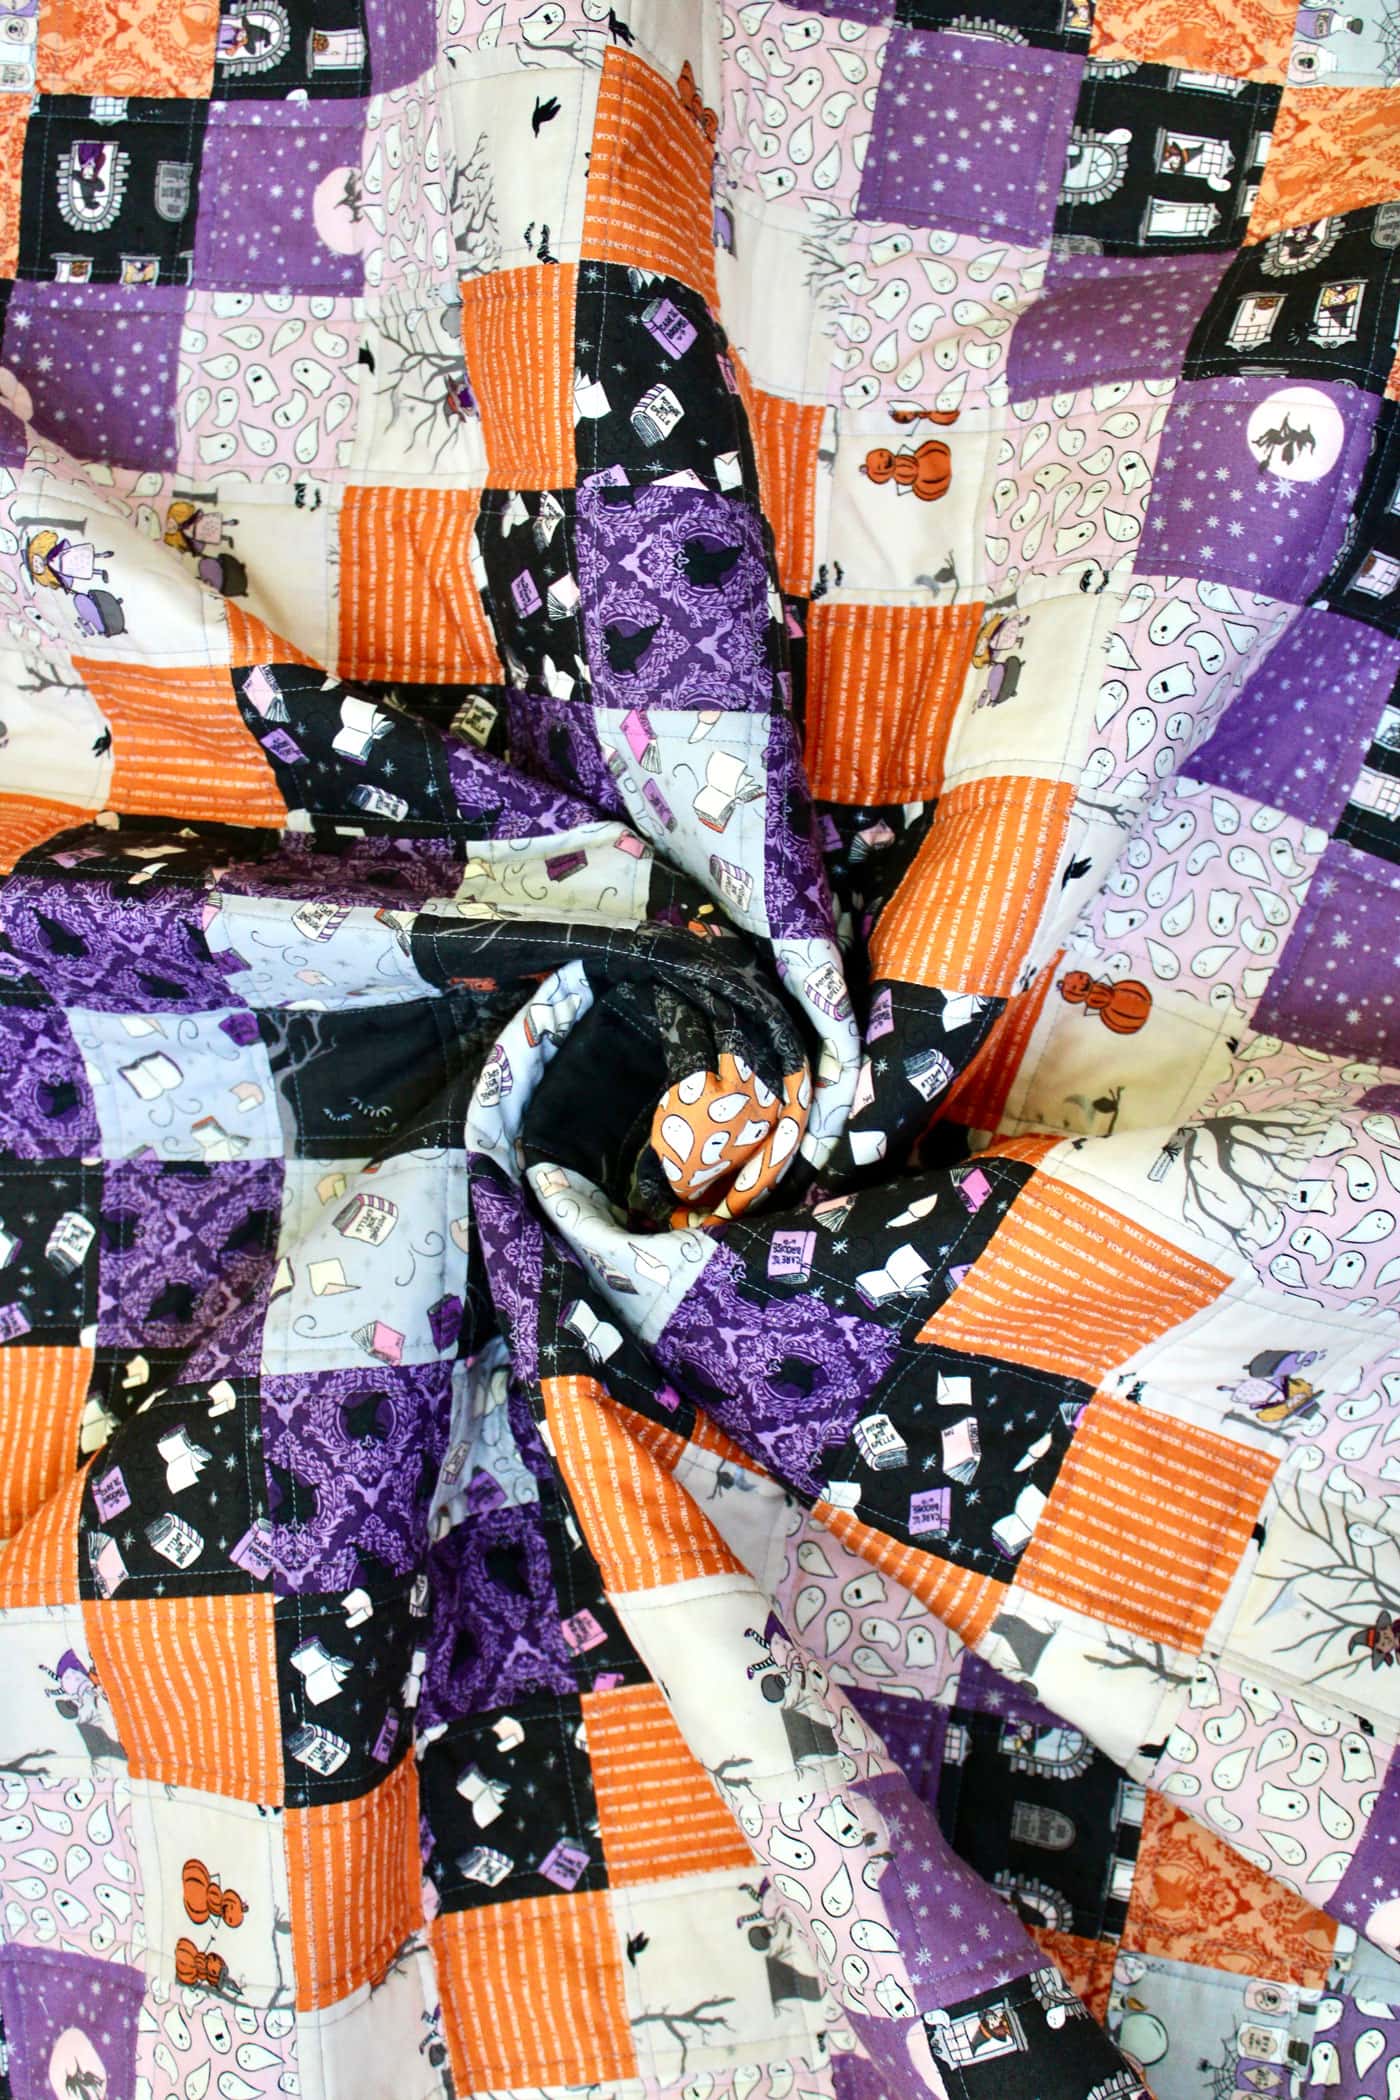 black, orange and purple patchwork quilt outdoors